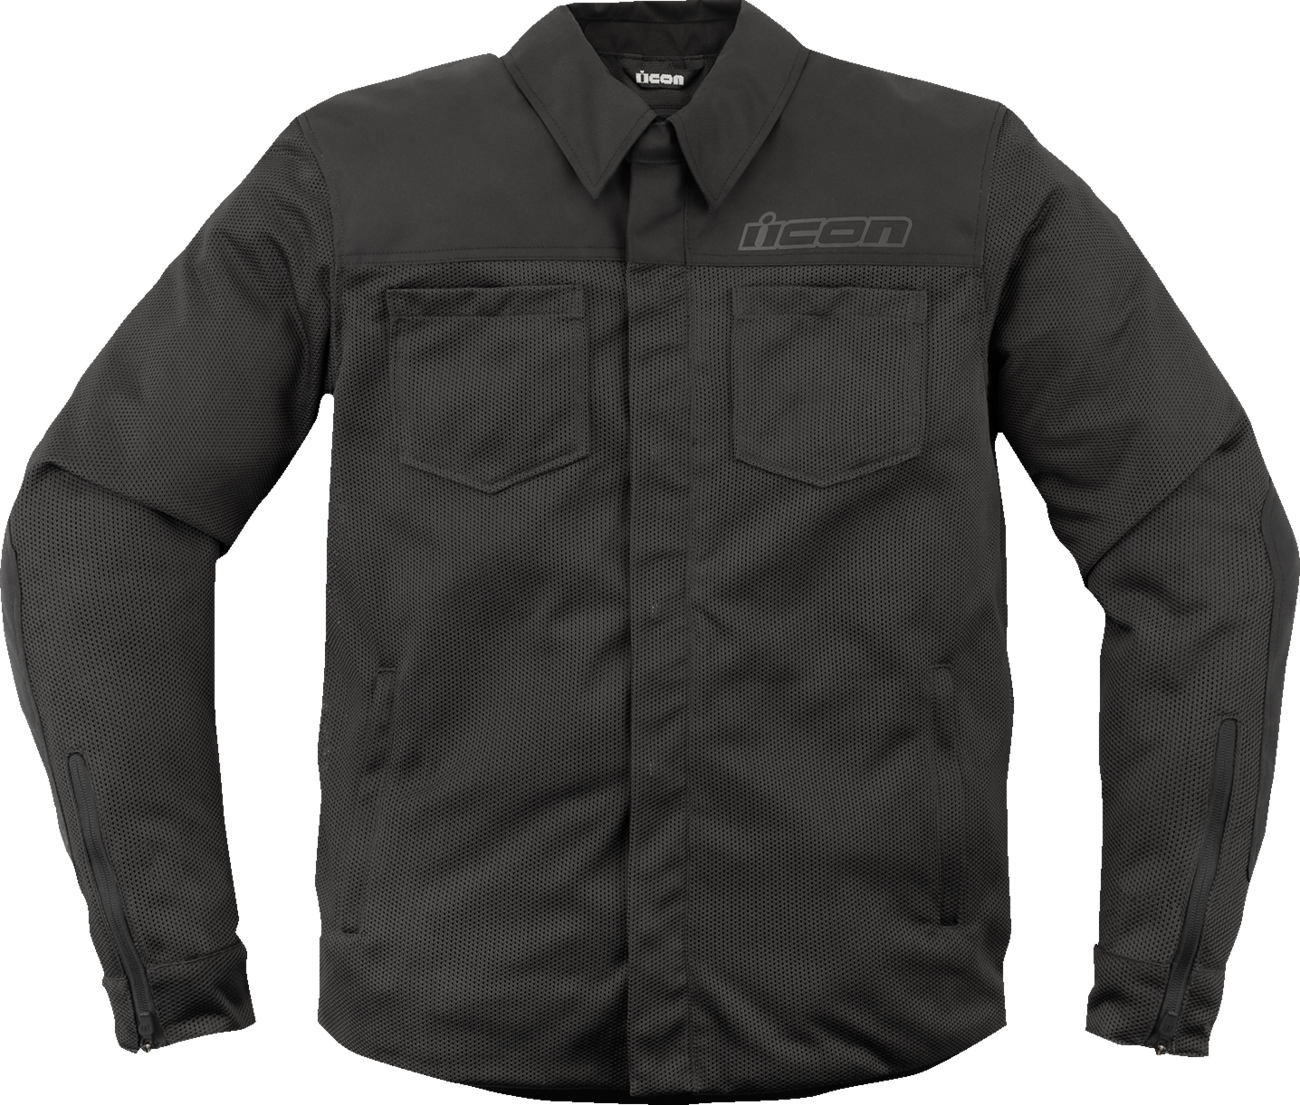 ICON Upstate Mesh CE Jacket - Black - 2XL 2820-6221